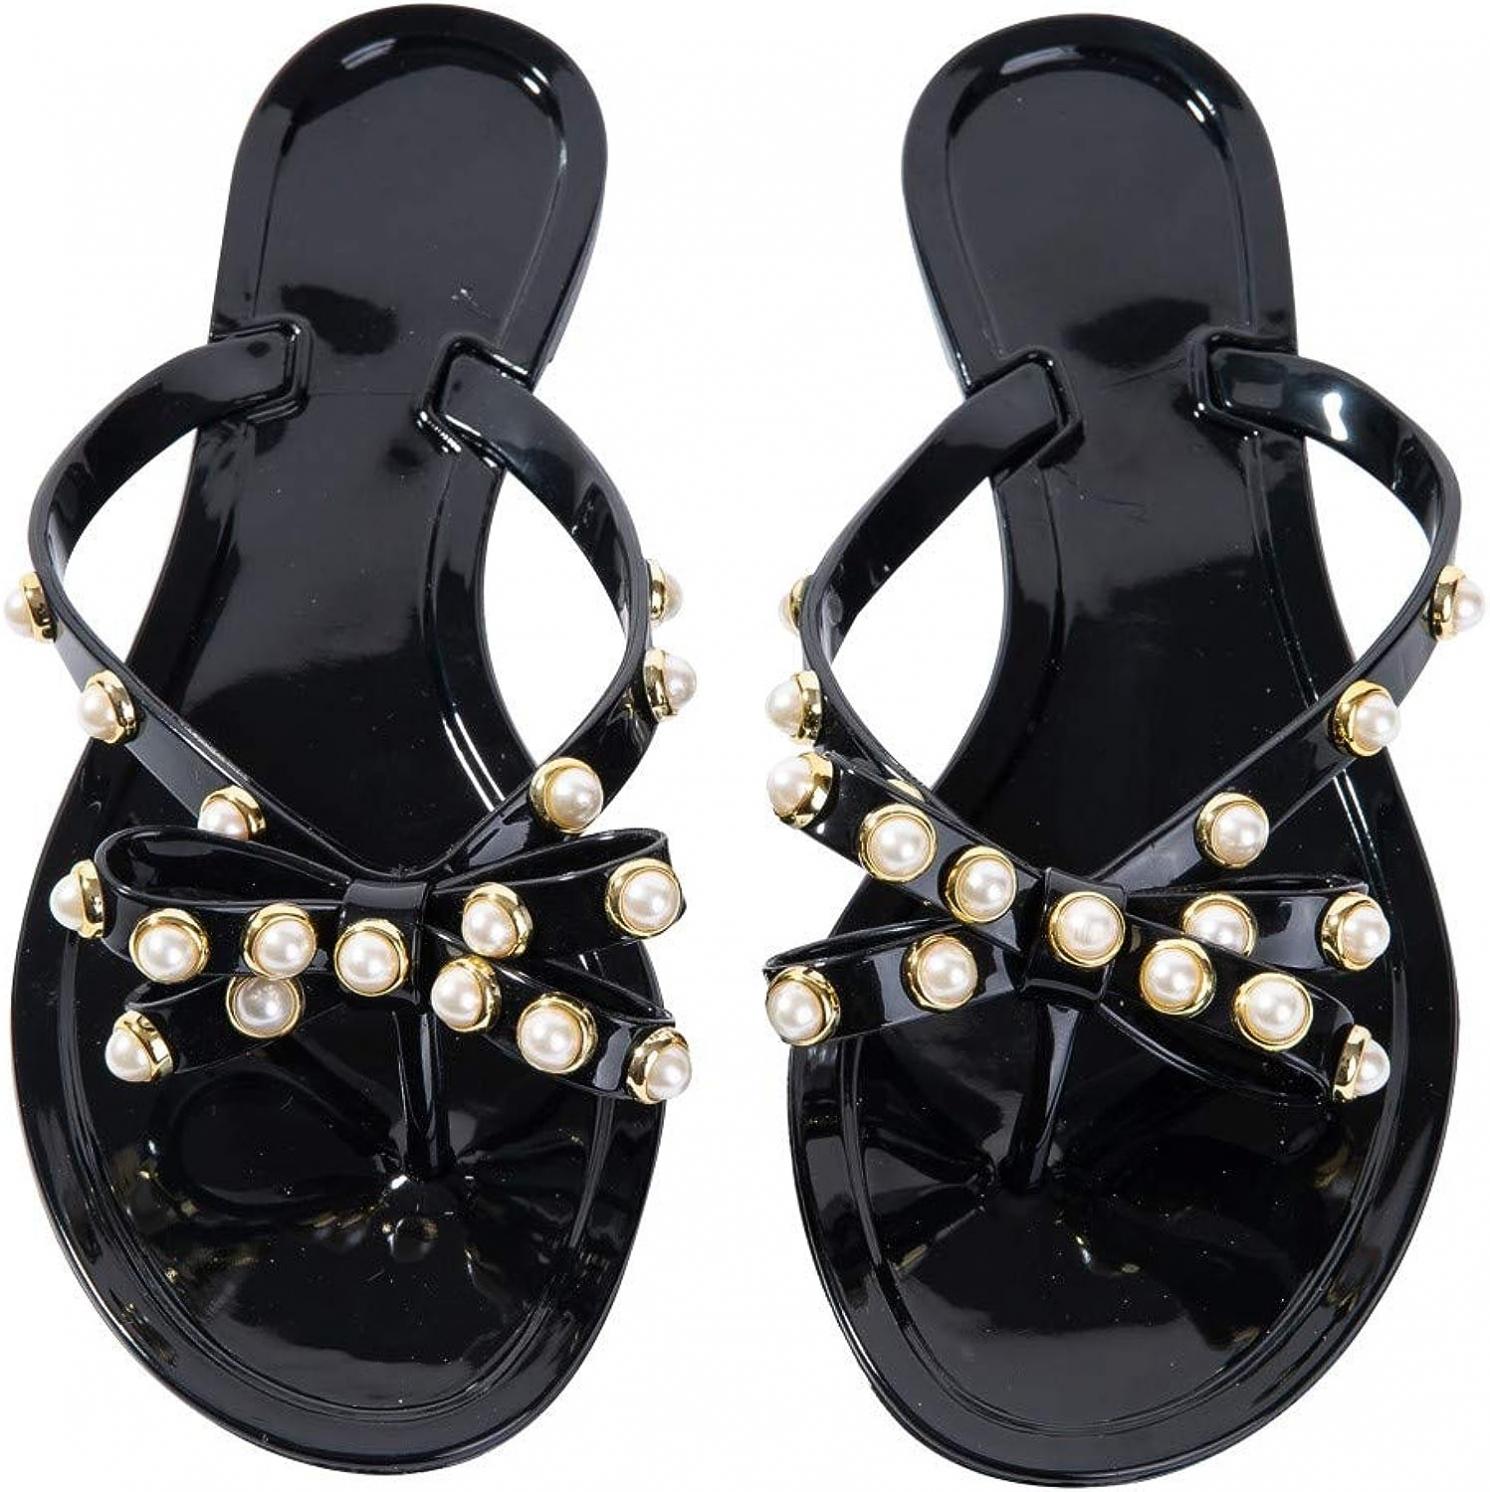 Mtzyoa Women Flip-Flops Flat Sandals Jelly Bow Beach Flat Rivets Rain Cute Dressy Summer Sandals